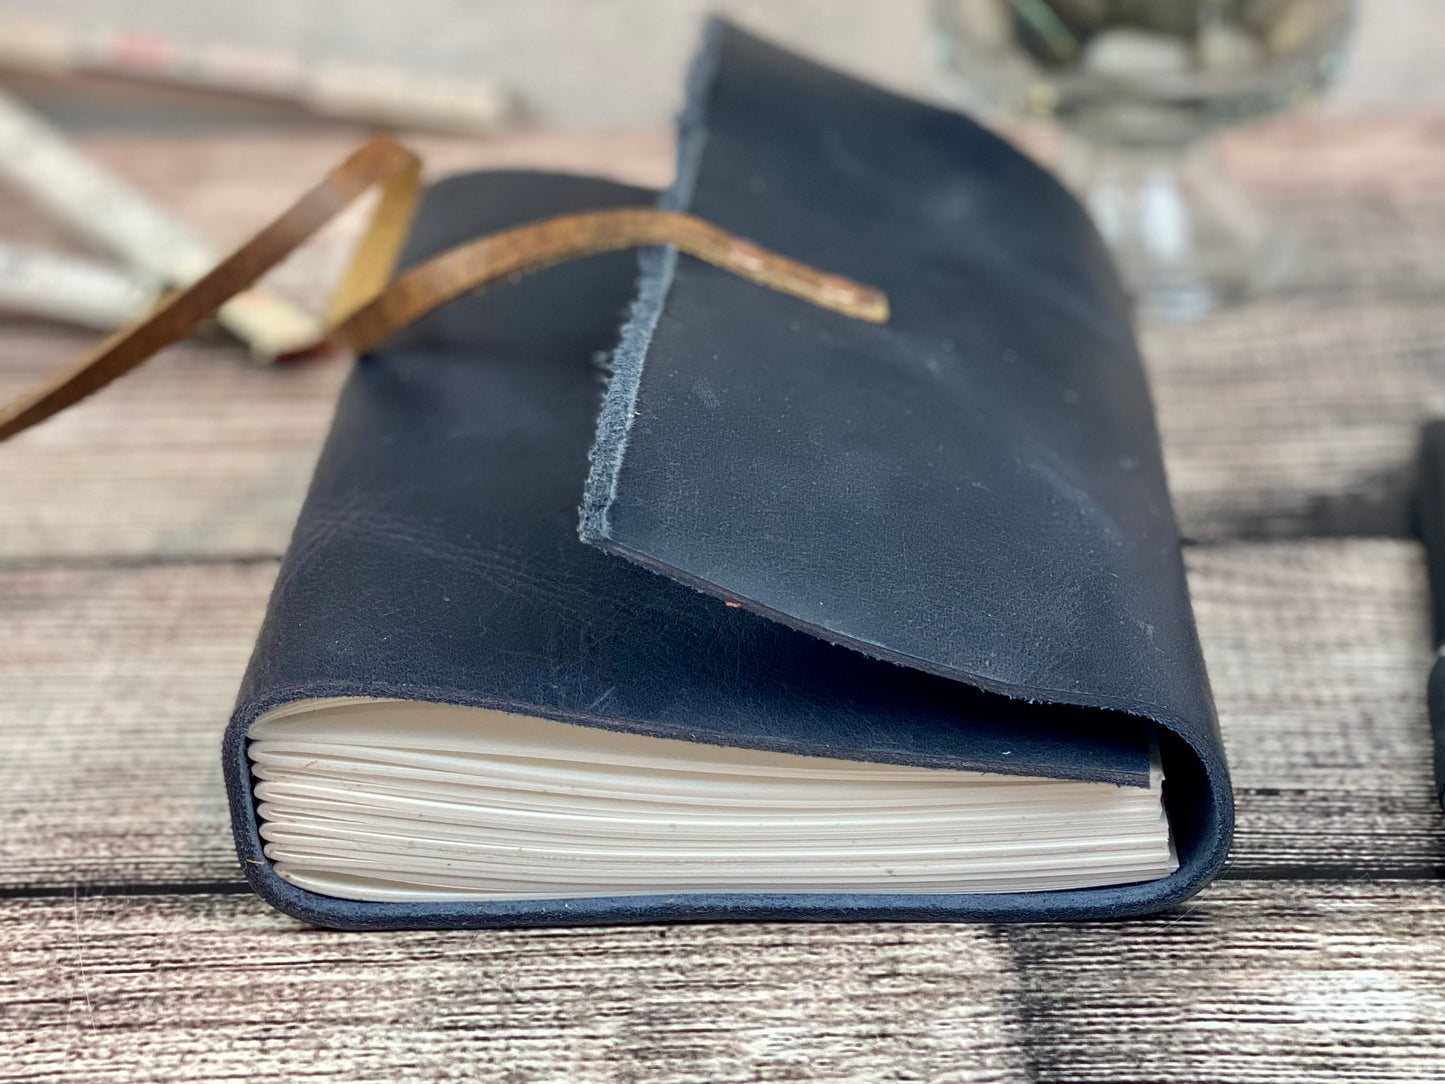 Medium Leather Journal - Quarry Blue Bison